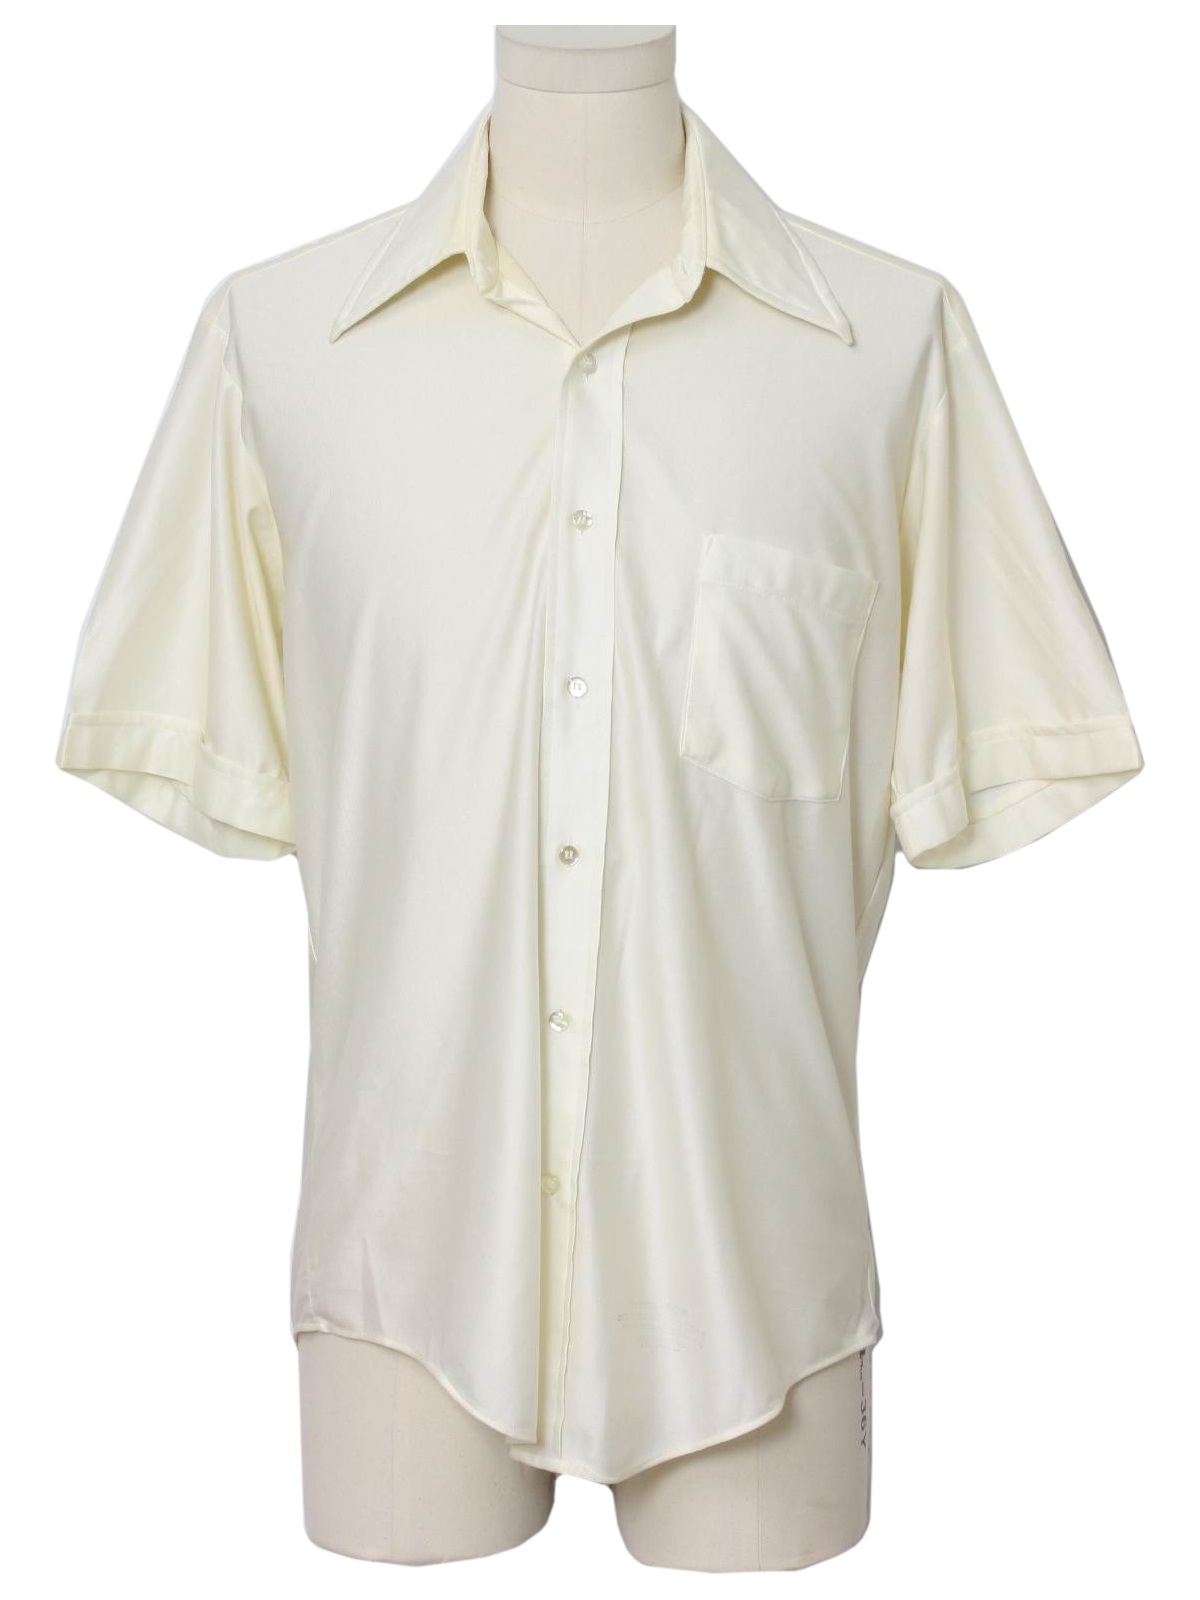 Vintage 1970's Disco Shirt: 70s -Golden Comfort- Mens off white qiana ...